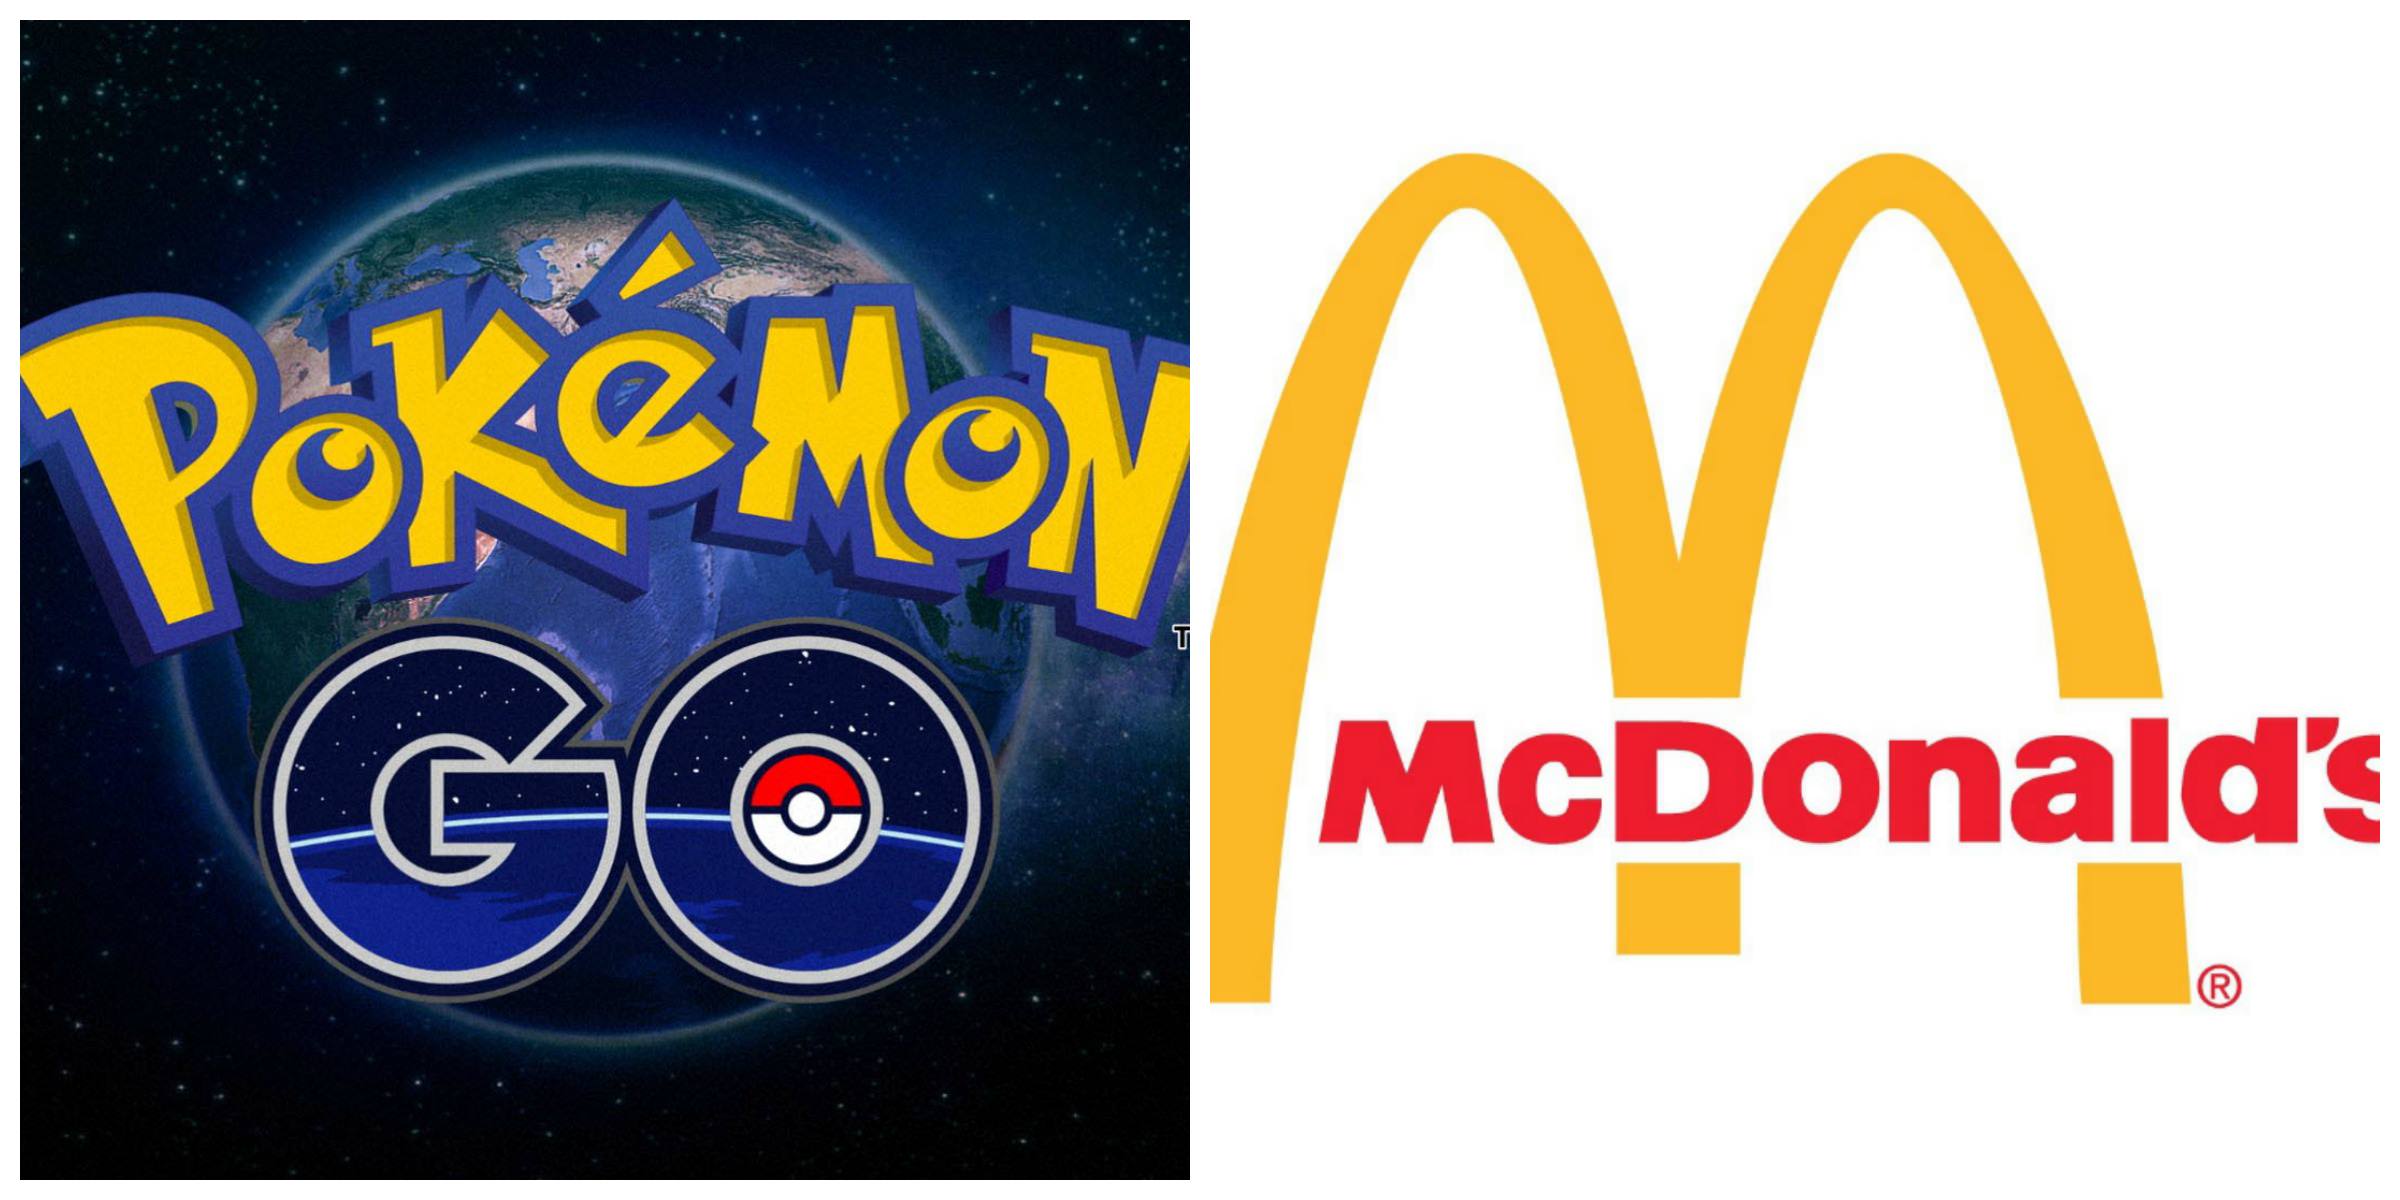 [Rumor] ‘Pokémon GO’ planea usar McDonald’s como PokéStops y Gimnasios en Asia